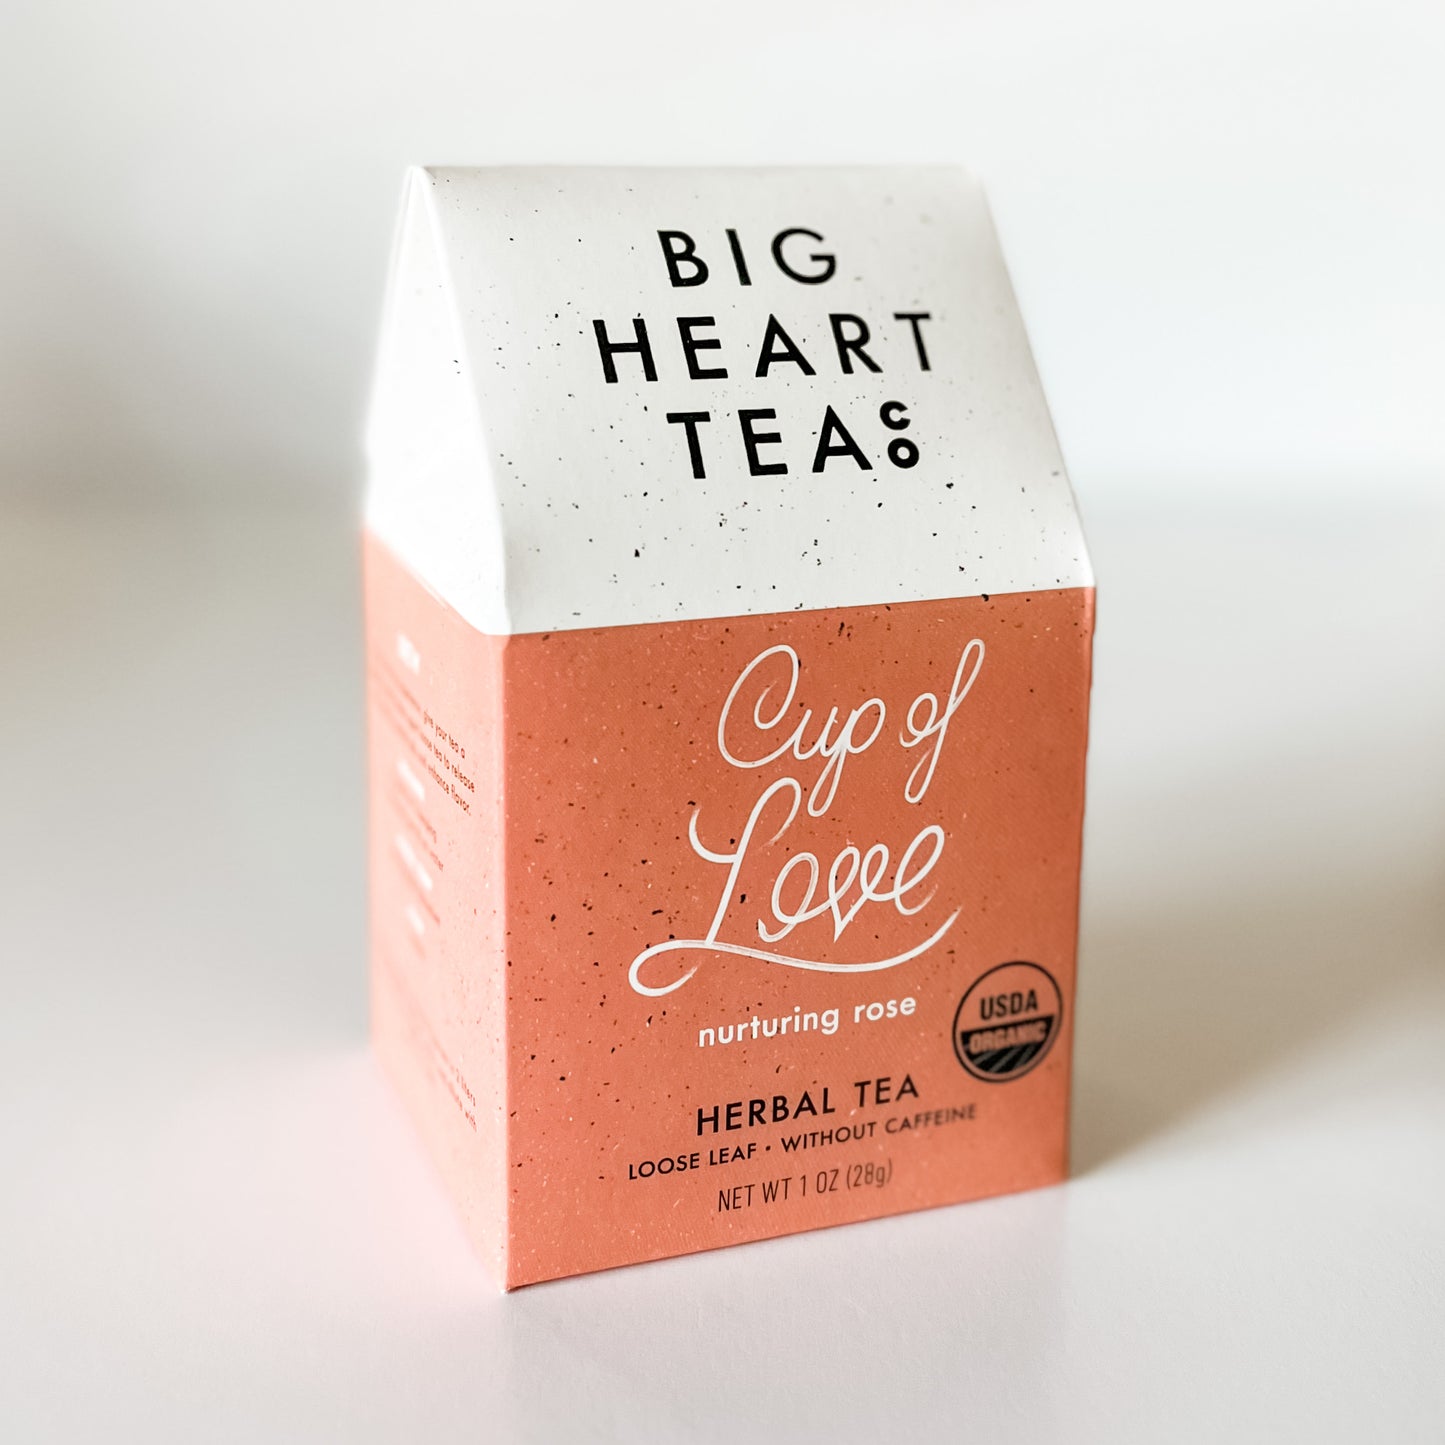 big heart tea co cup of love herbal tea, loose leaf tea 